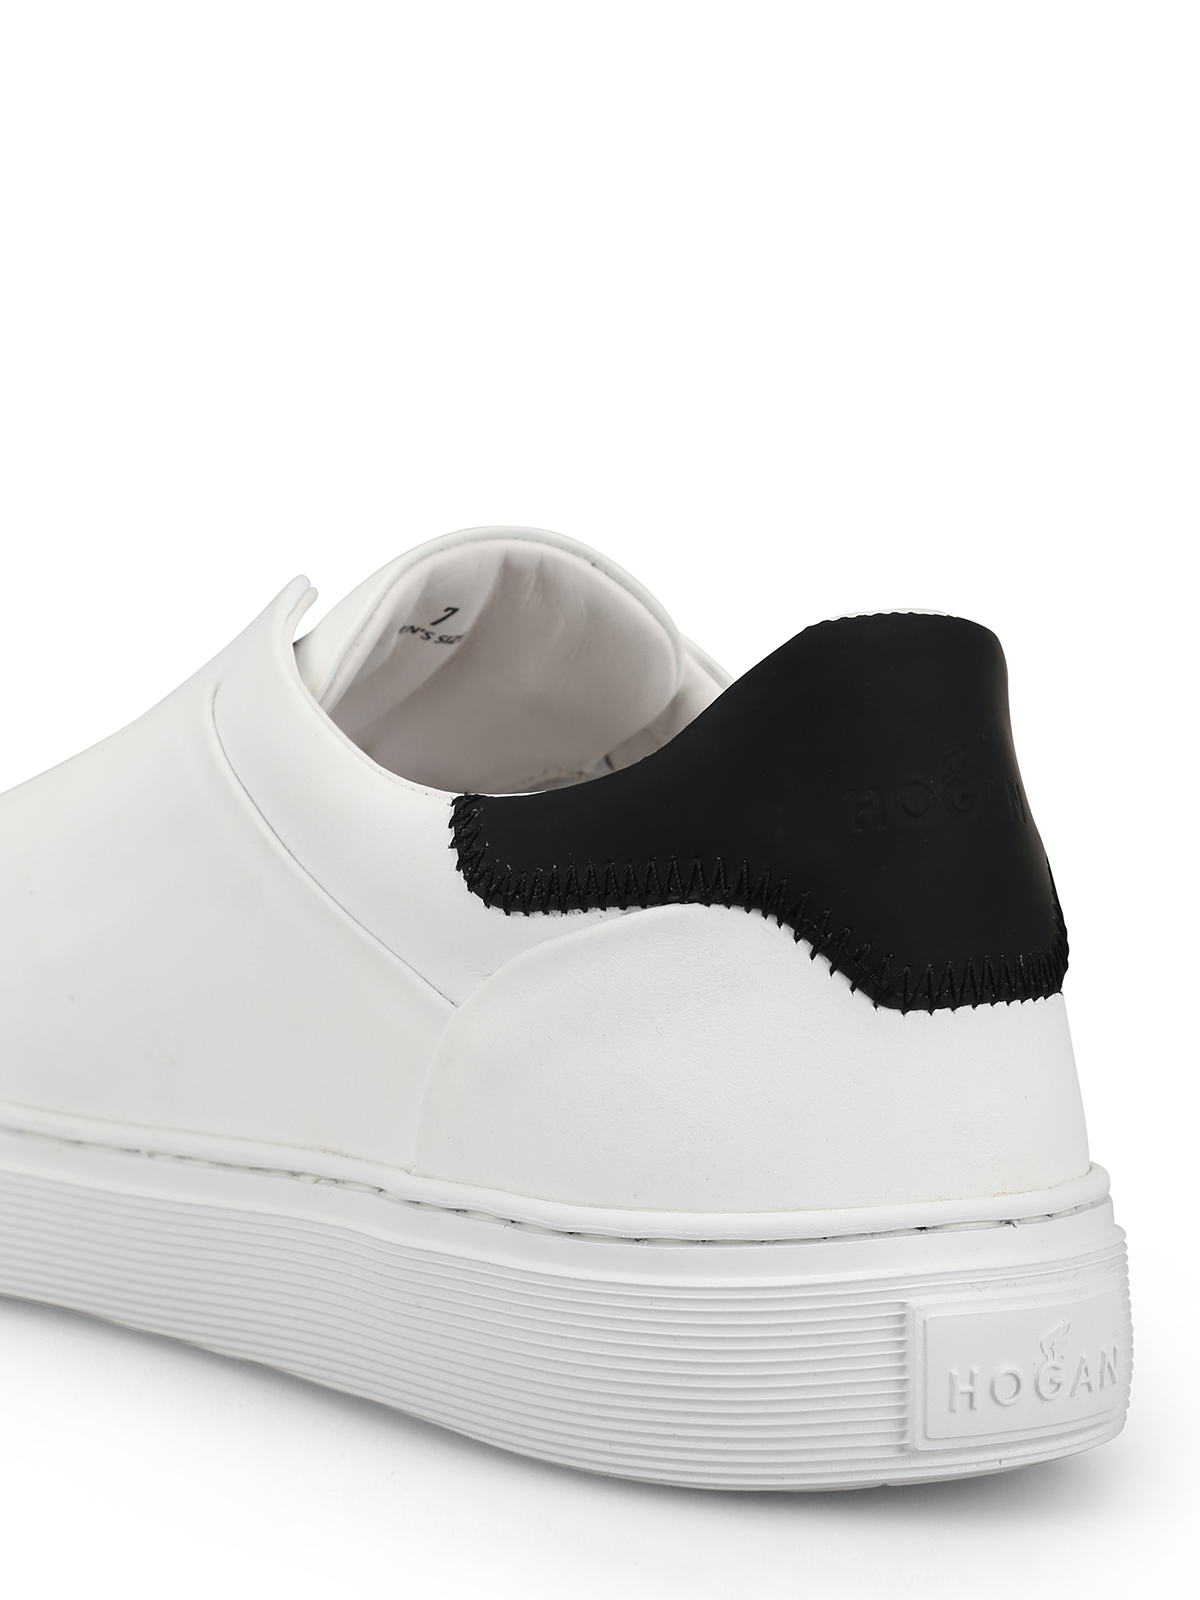 Hogan - H365 white leather slip-ons 